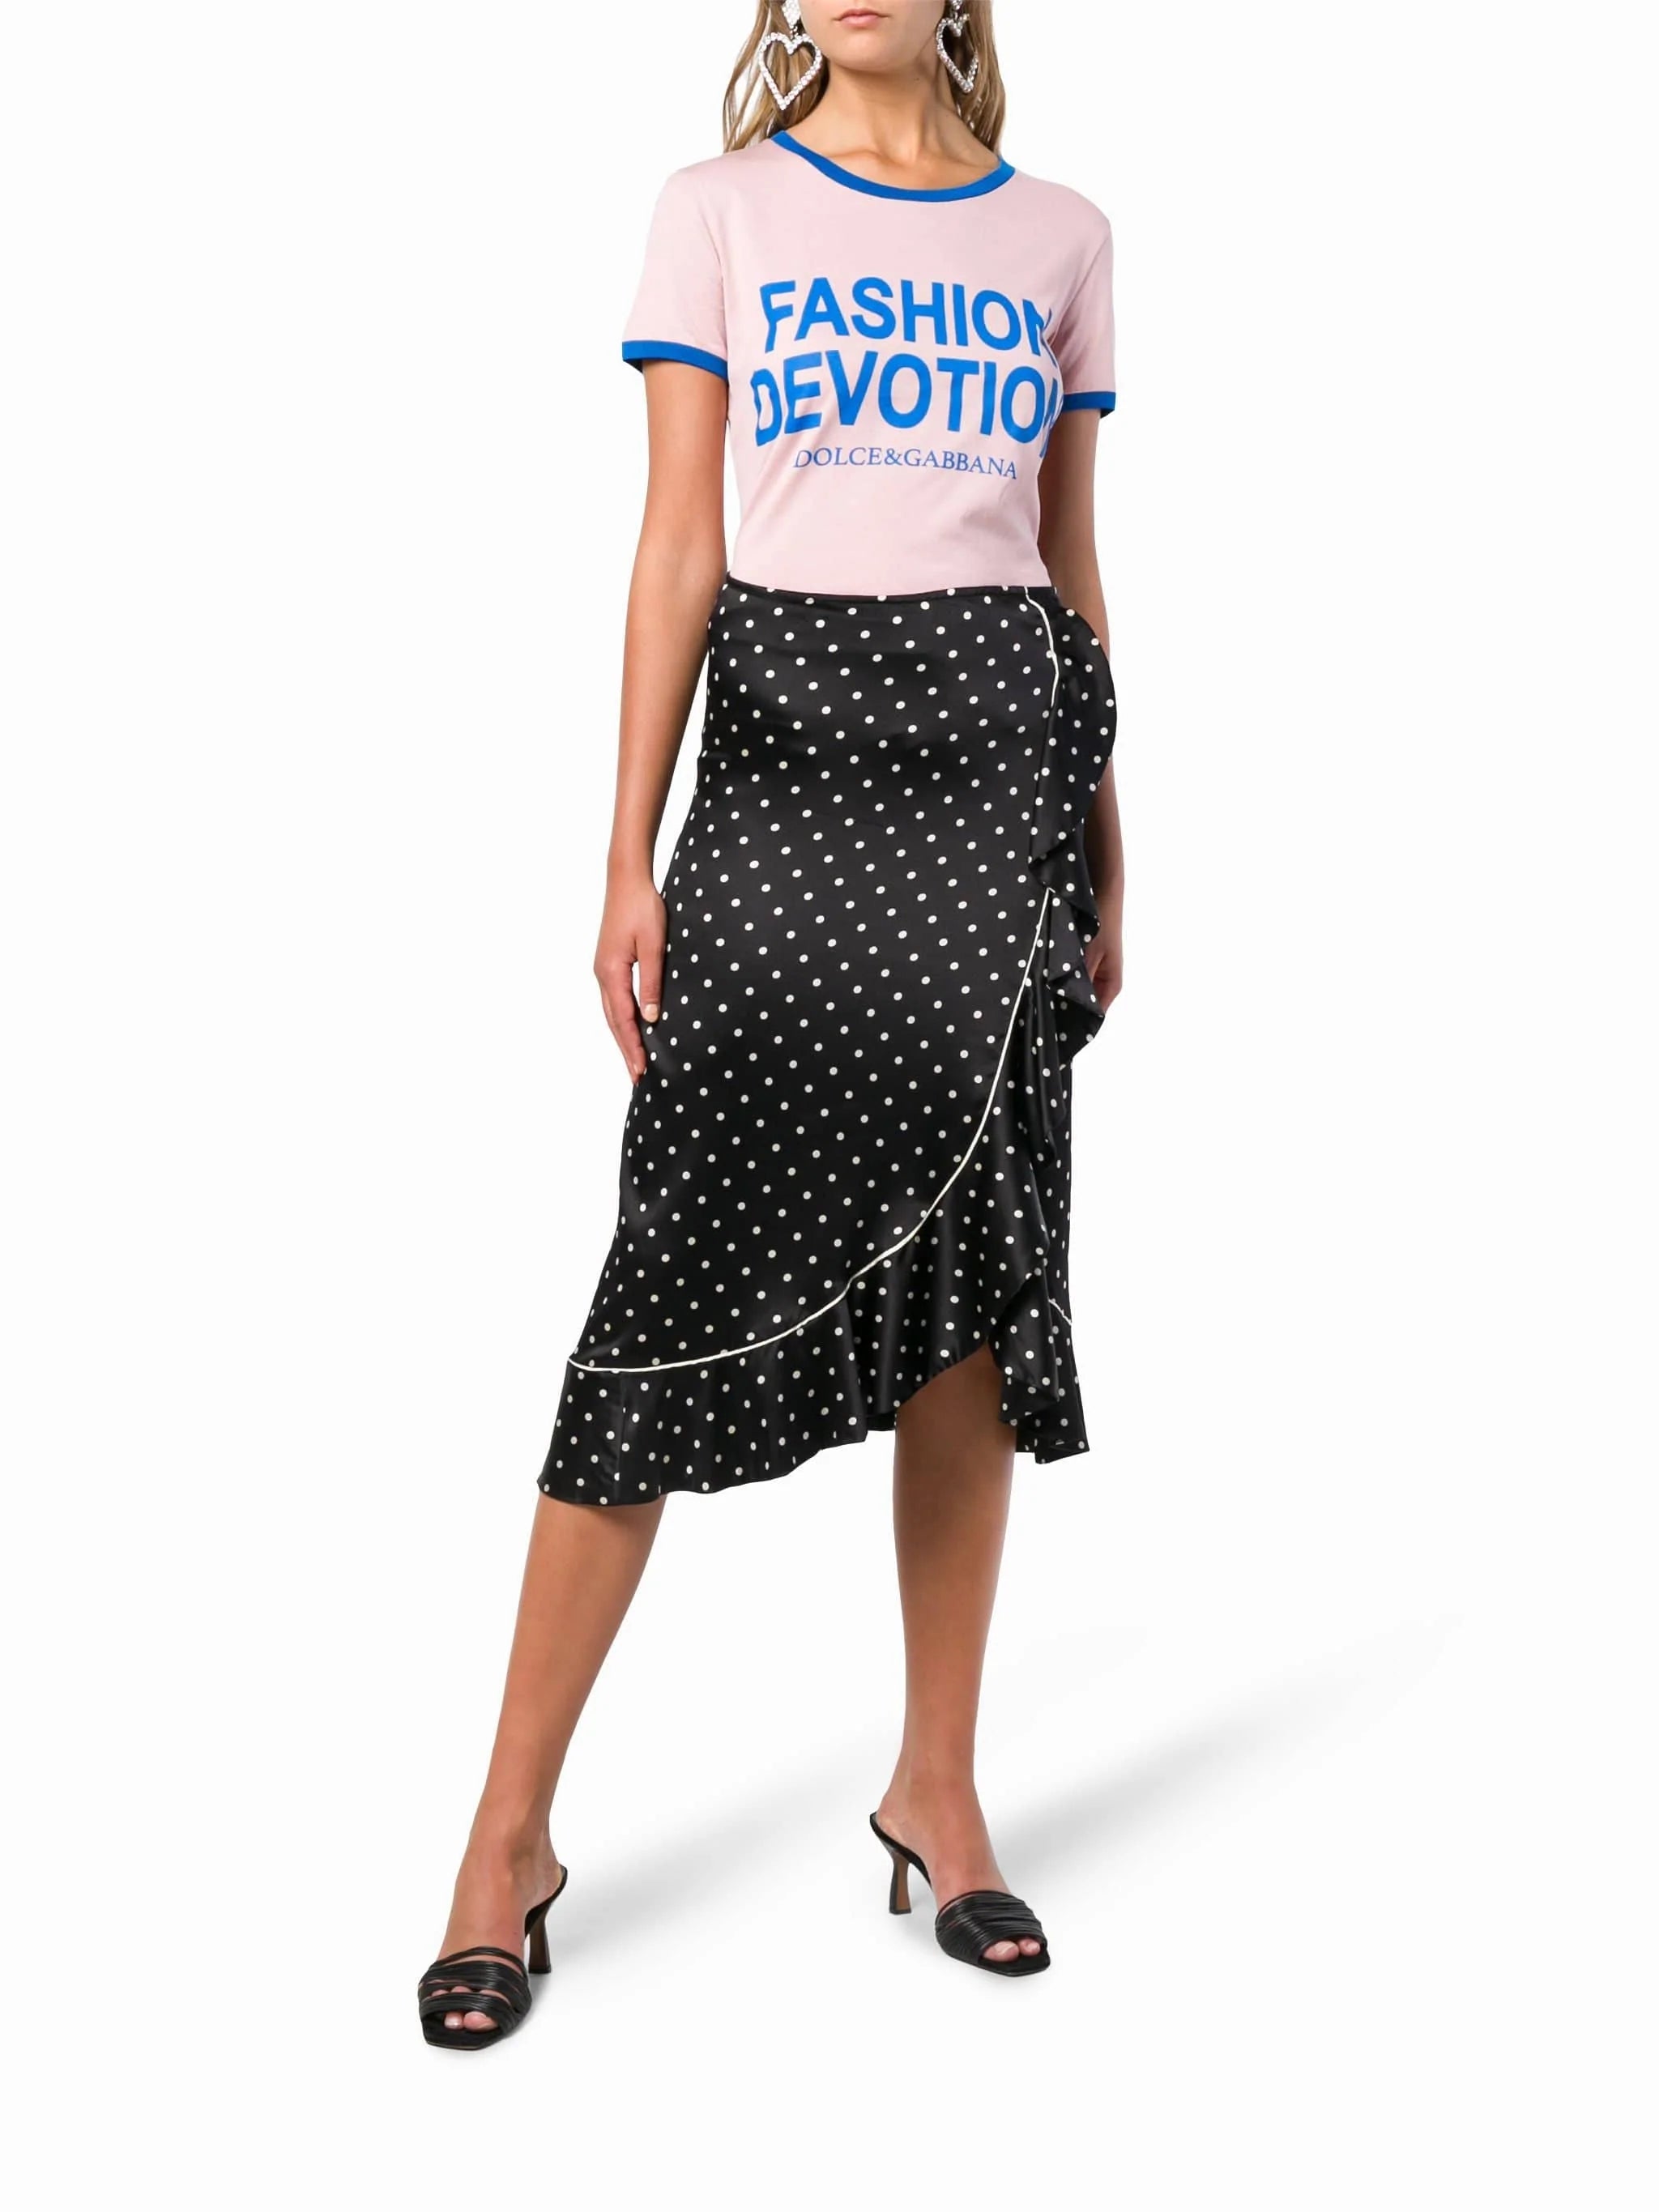 Dolce & Gabbana Fashion Devotion Print T-Shirt